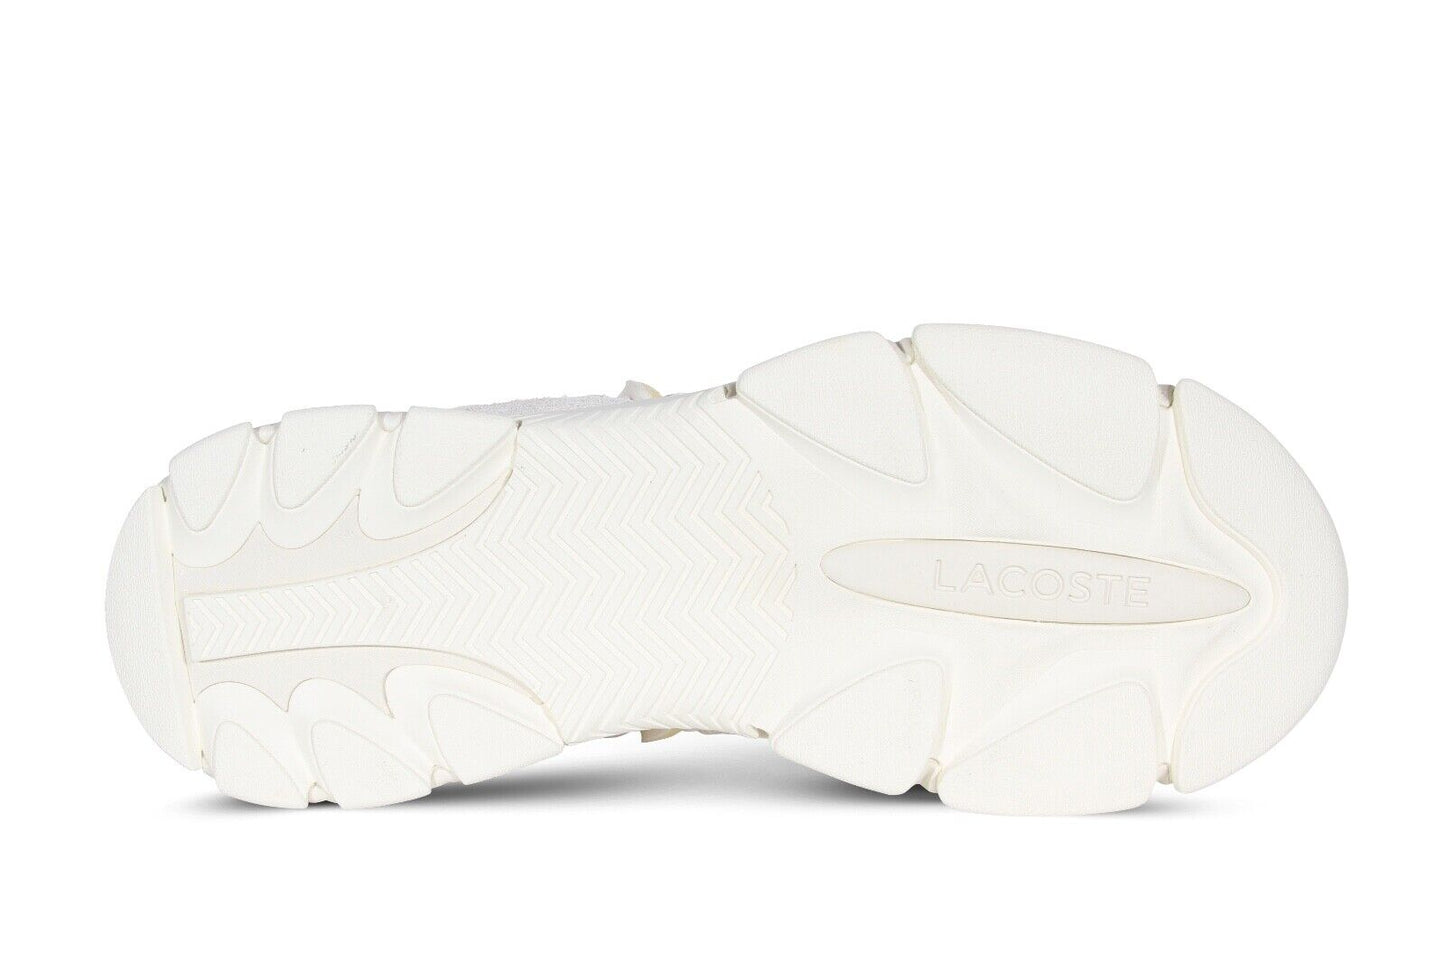 Lacoste L003 Neo 123 1 SMA Men's Sneakers in Off White and Black 745SMA00012G9